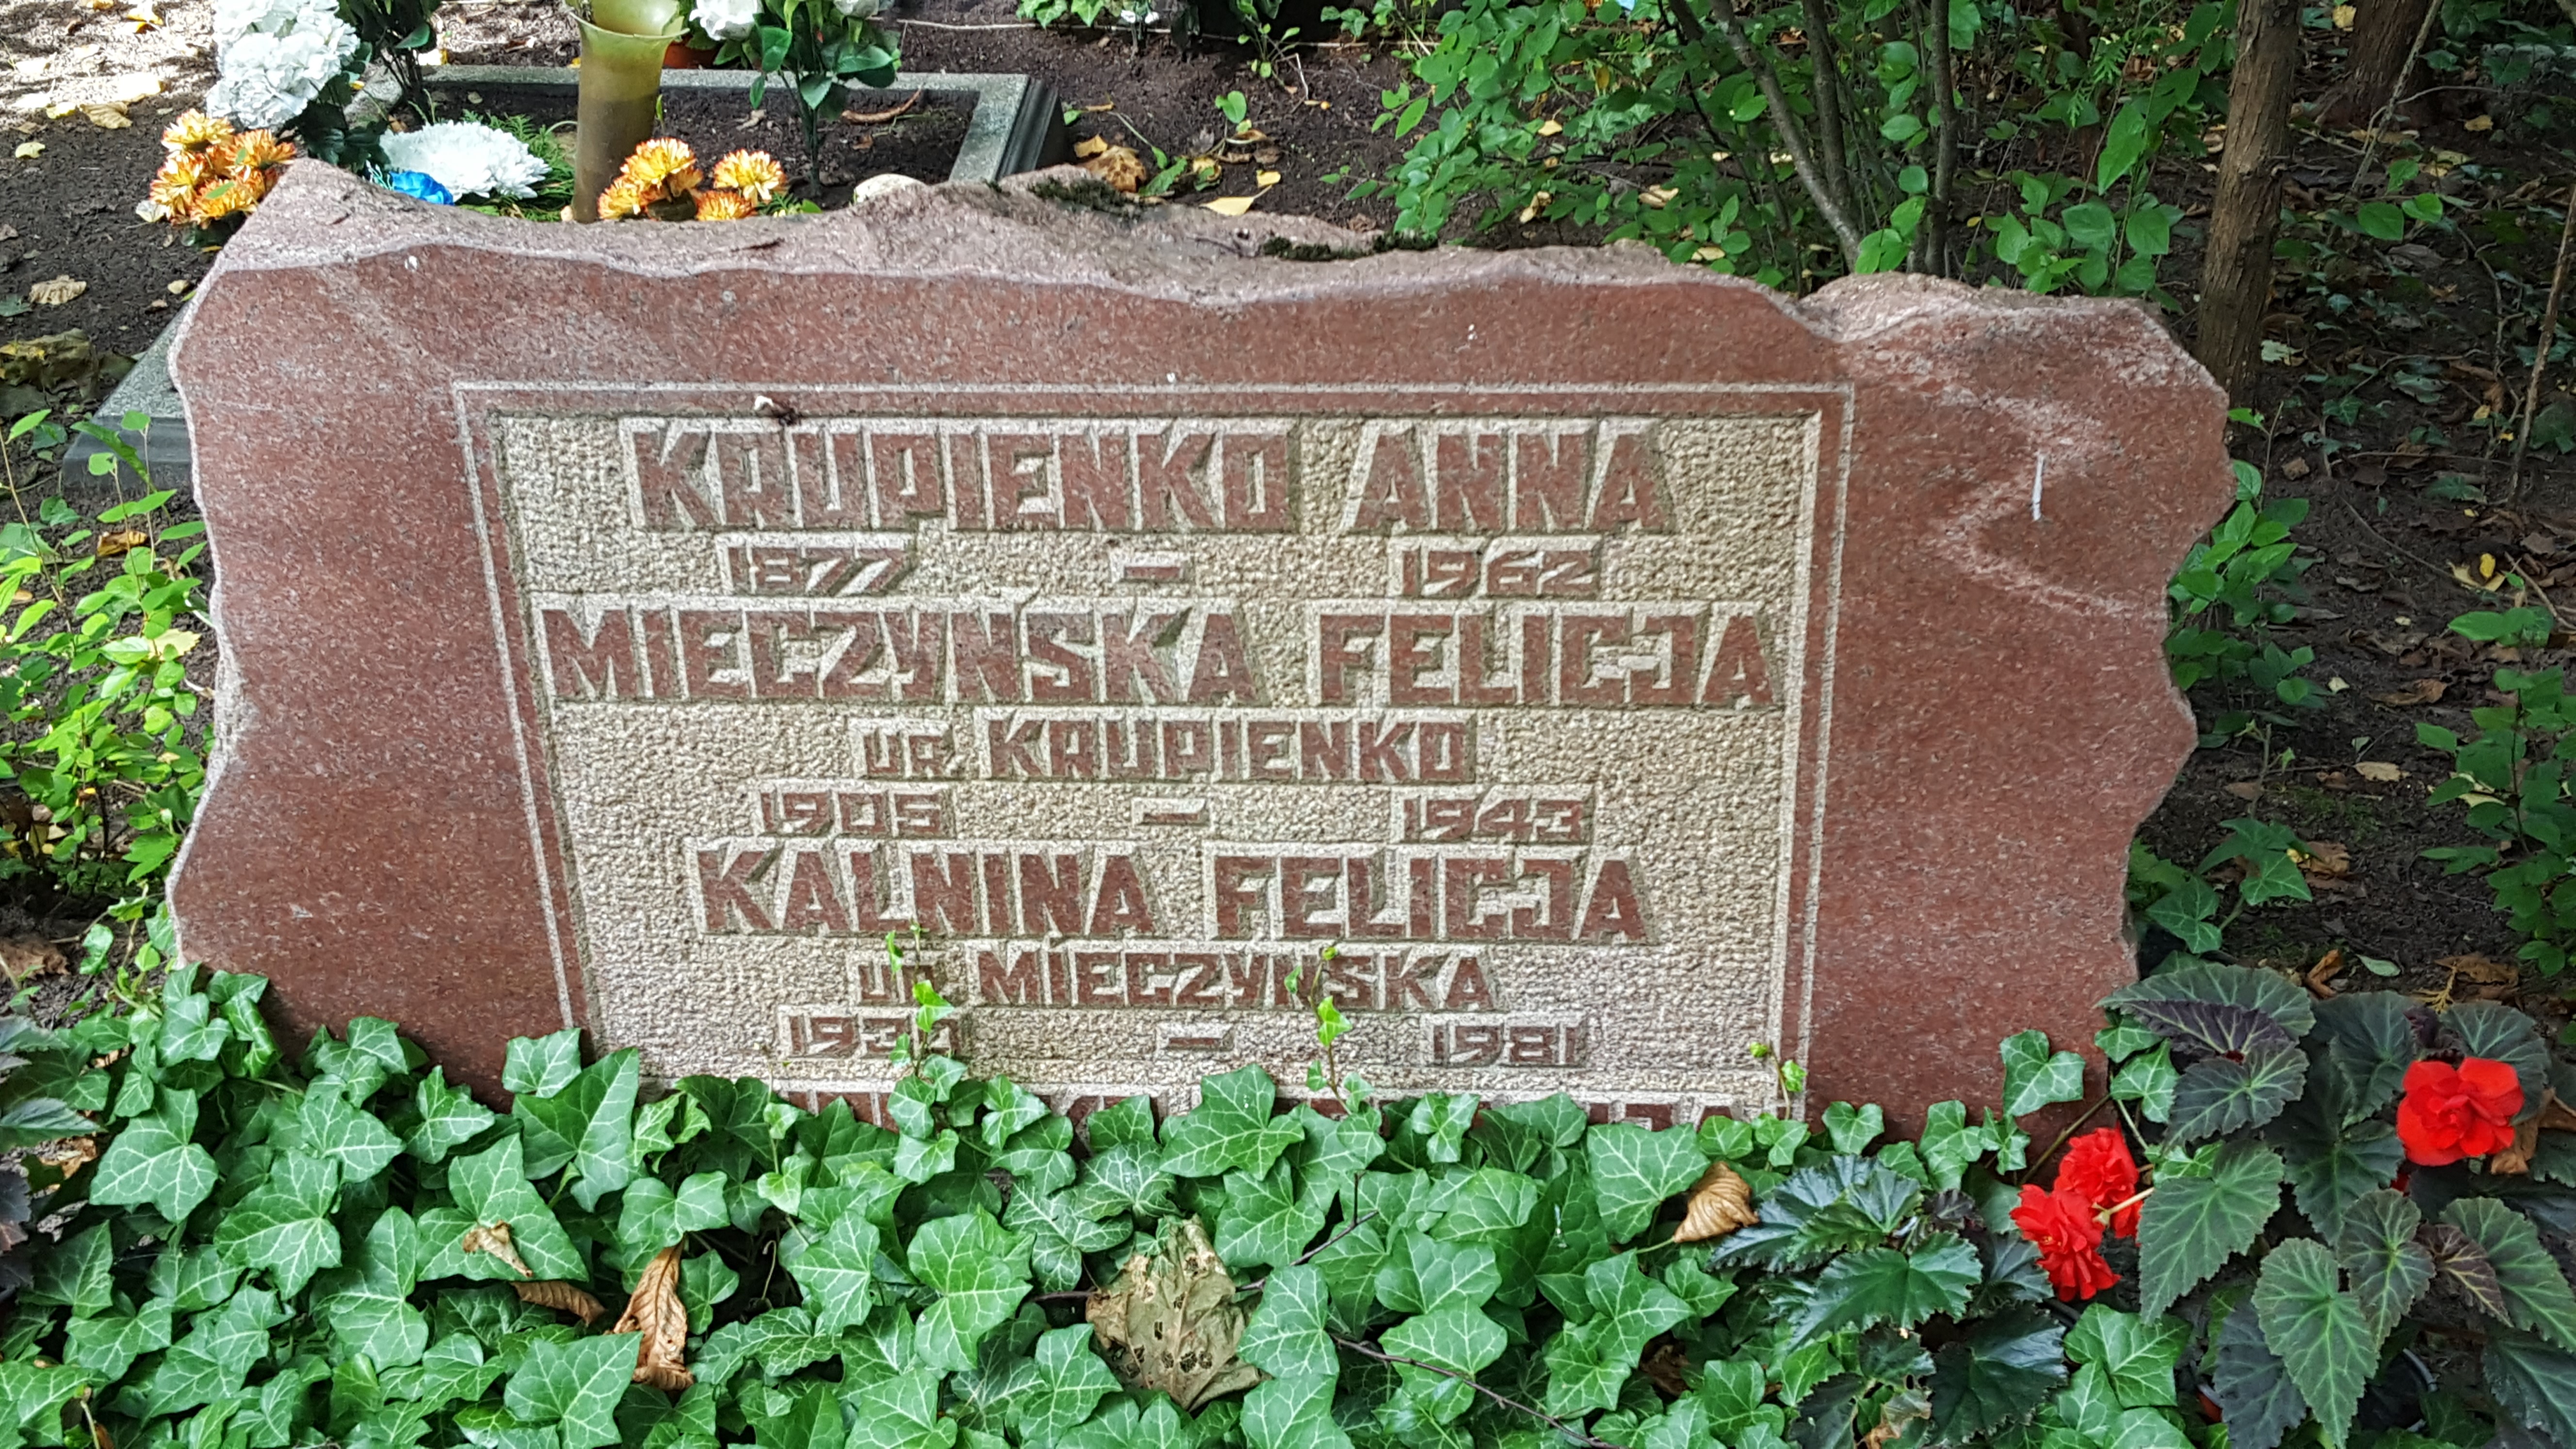 Inscription from the gravestone of Felicia Kalnina, Anna Krupienko, Felicia Mieczynska, St Michael's cemetery in Riga, as of 2021.